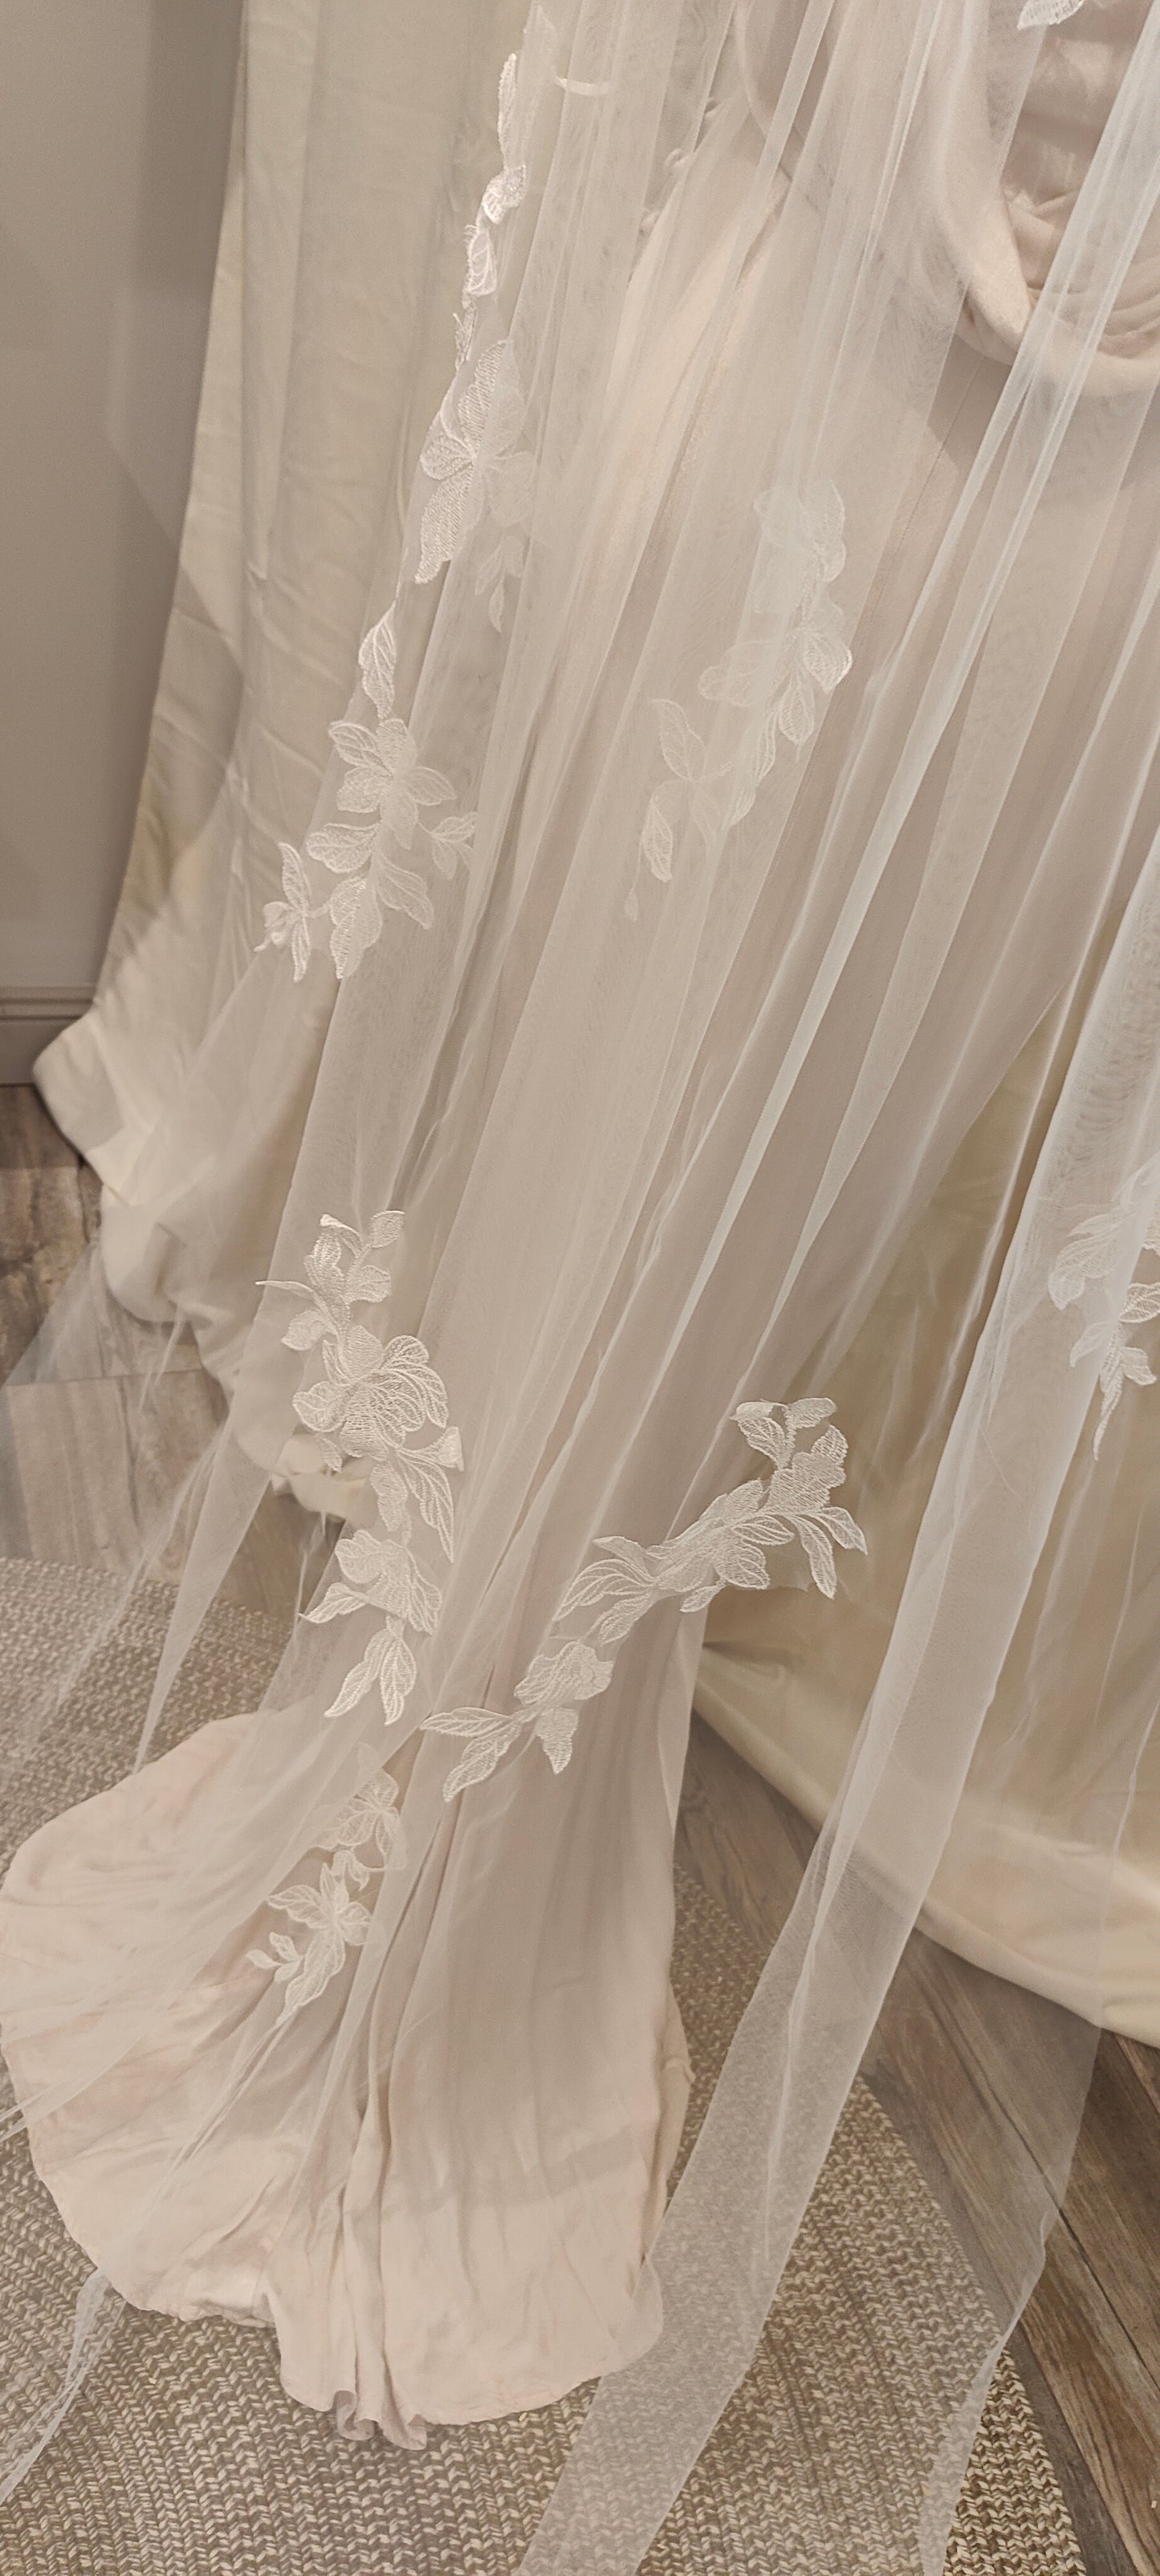 SOPHIA- Scattered floral lace applique veil